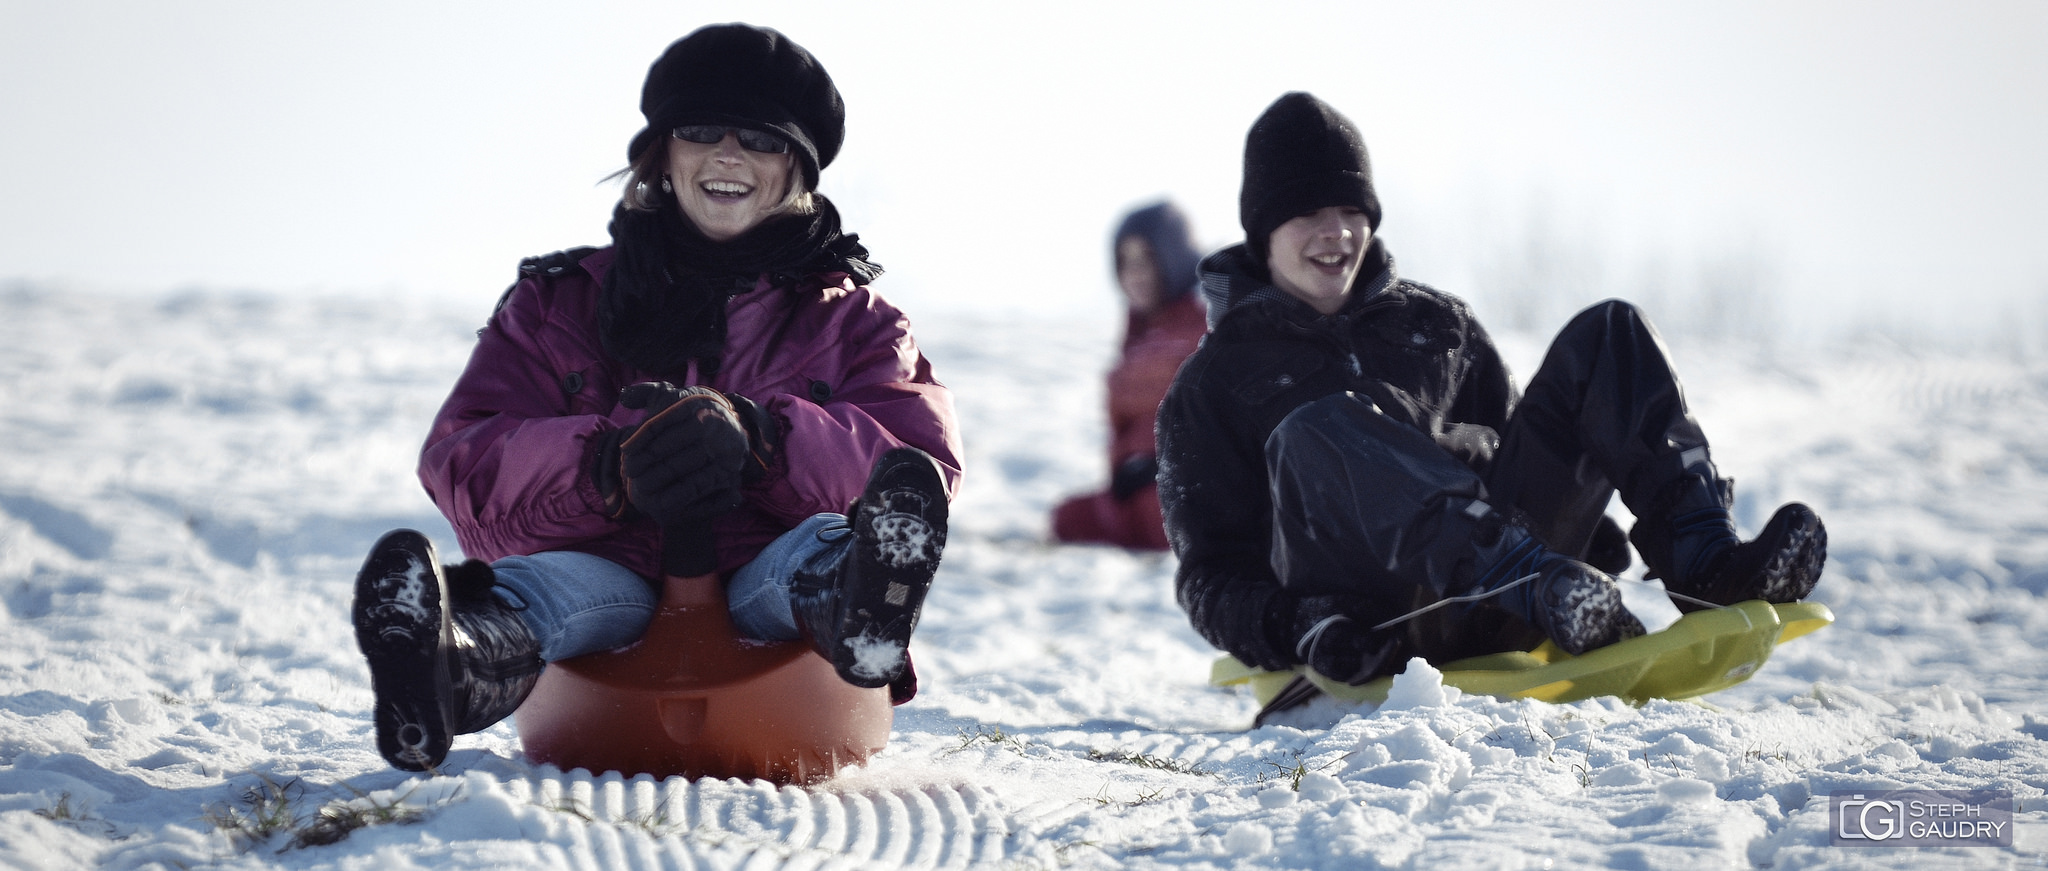 Promenades hivernales / Snow sled races